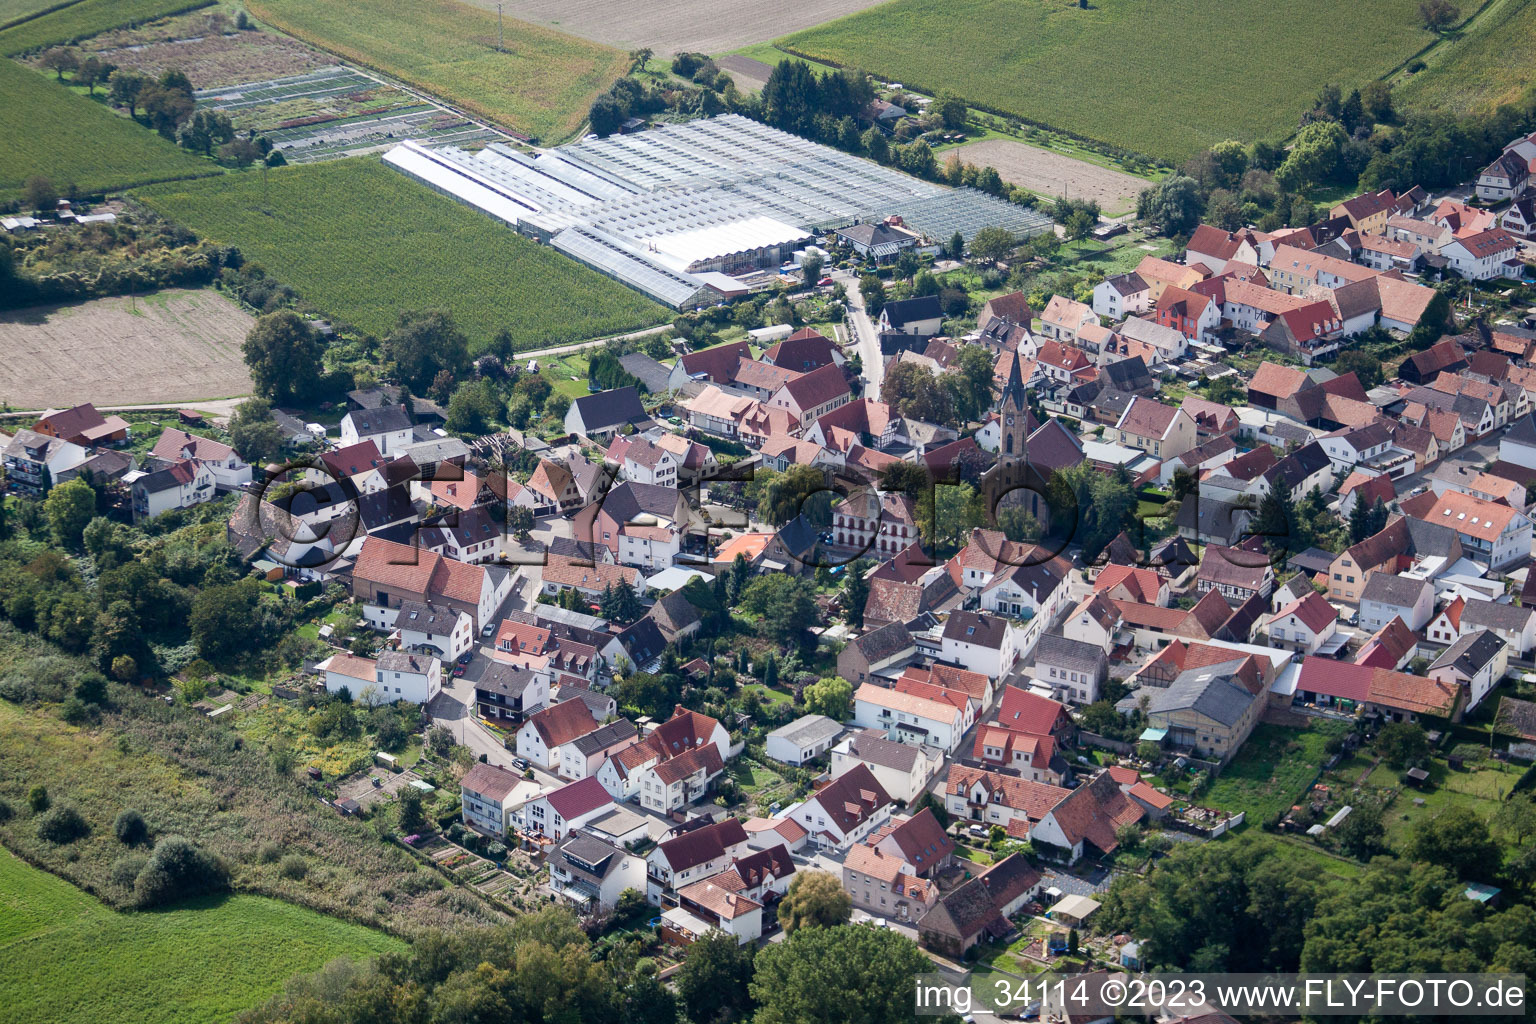 Drone recording of District Sondernheim in Germersheim in the state Rhineland-Palatinate, Germany